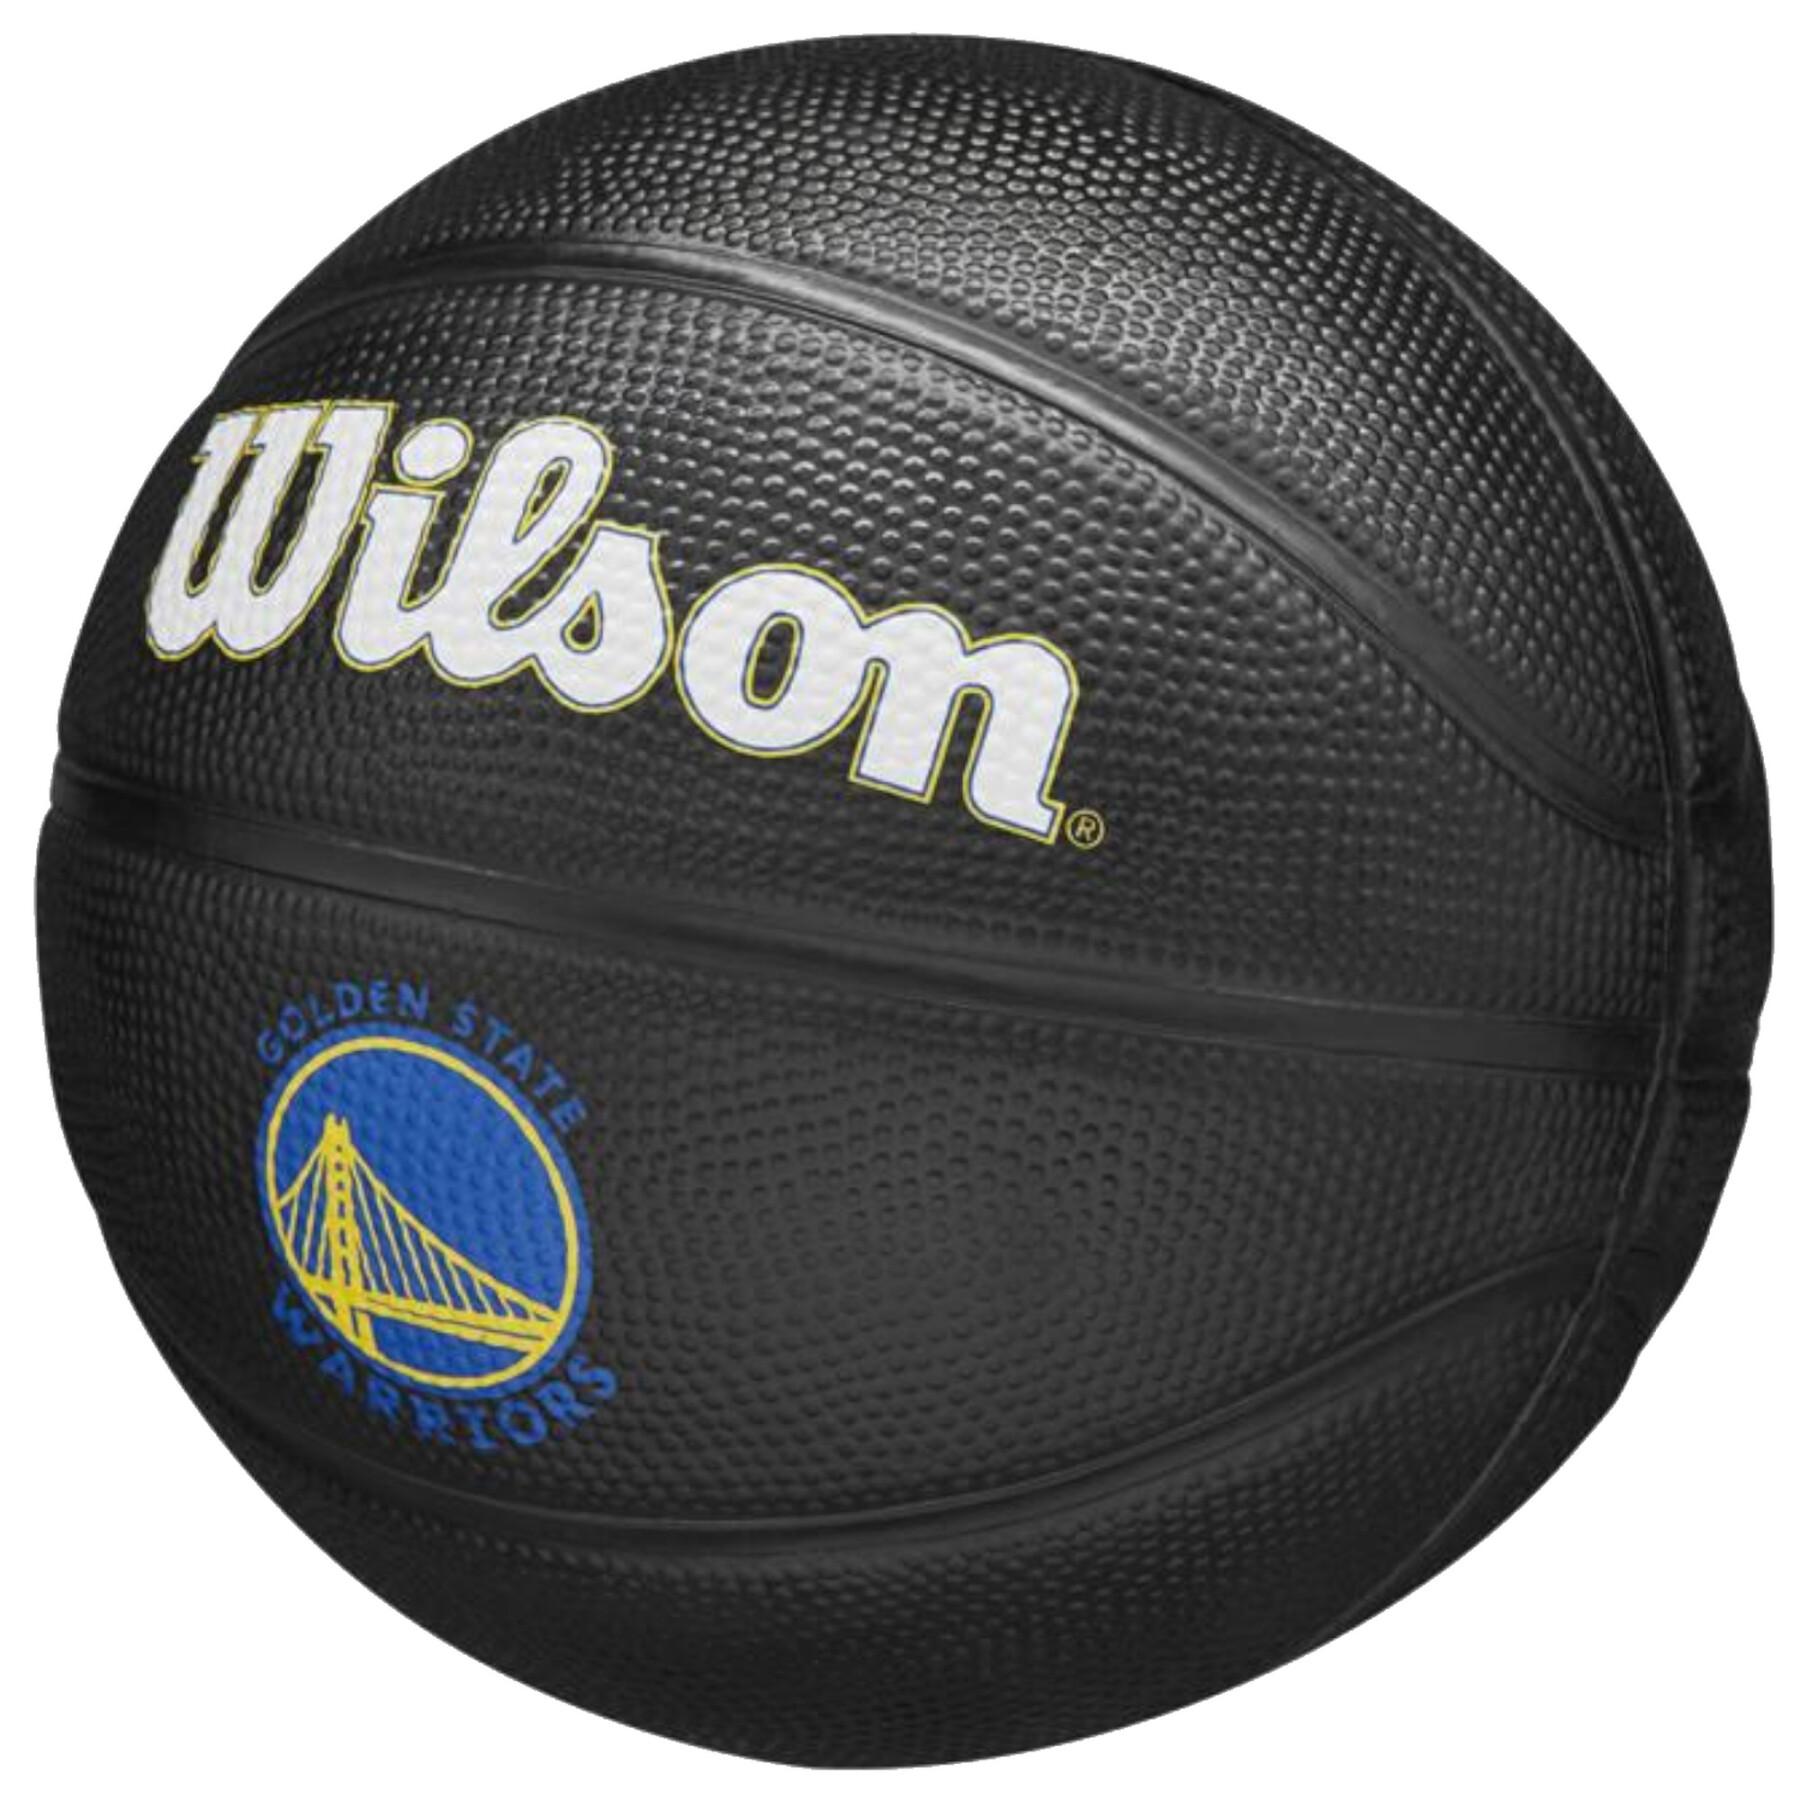 Wilson NBA Golden State Warriors Mini Basketball